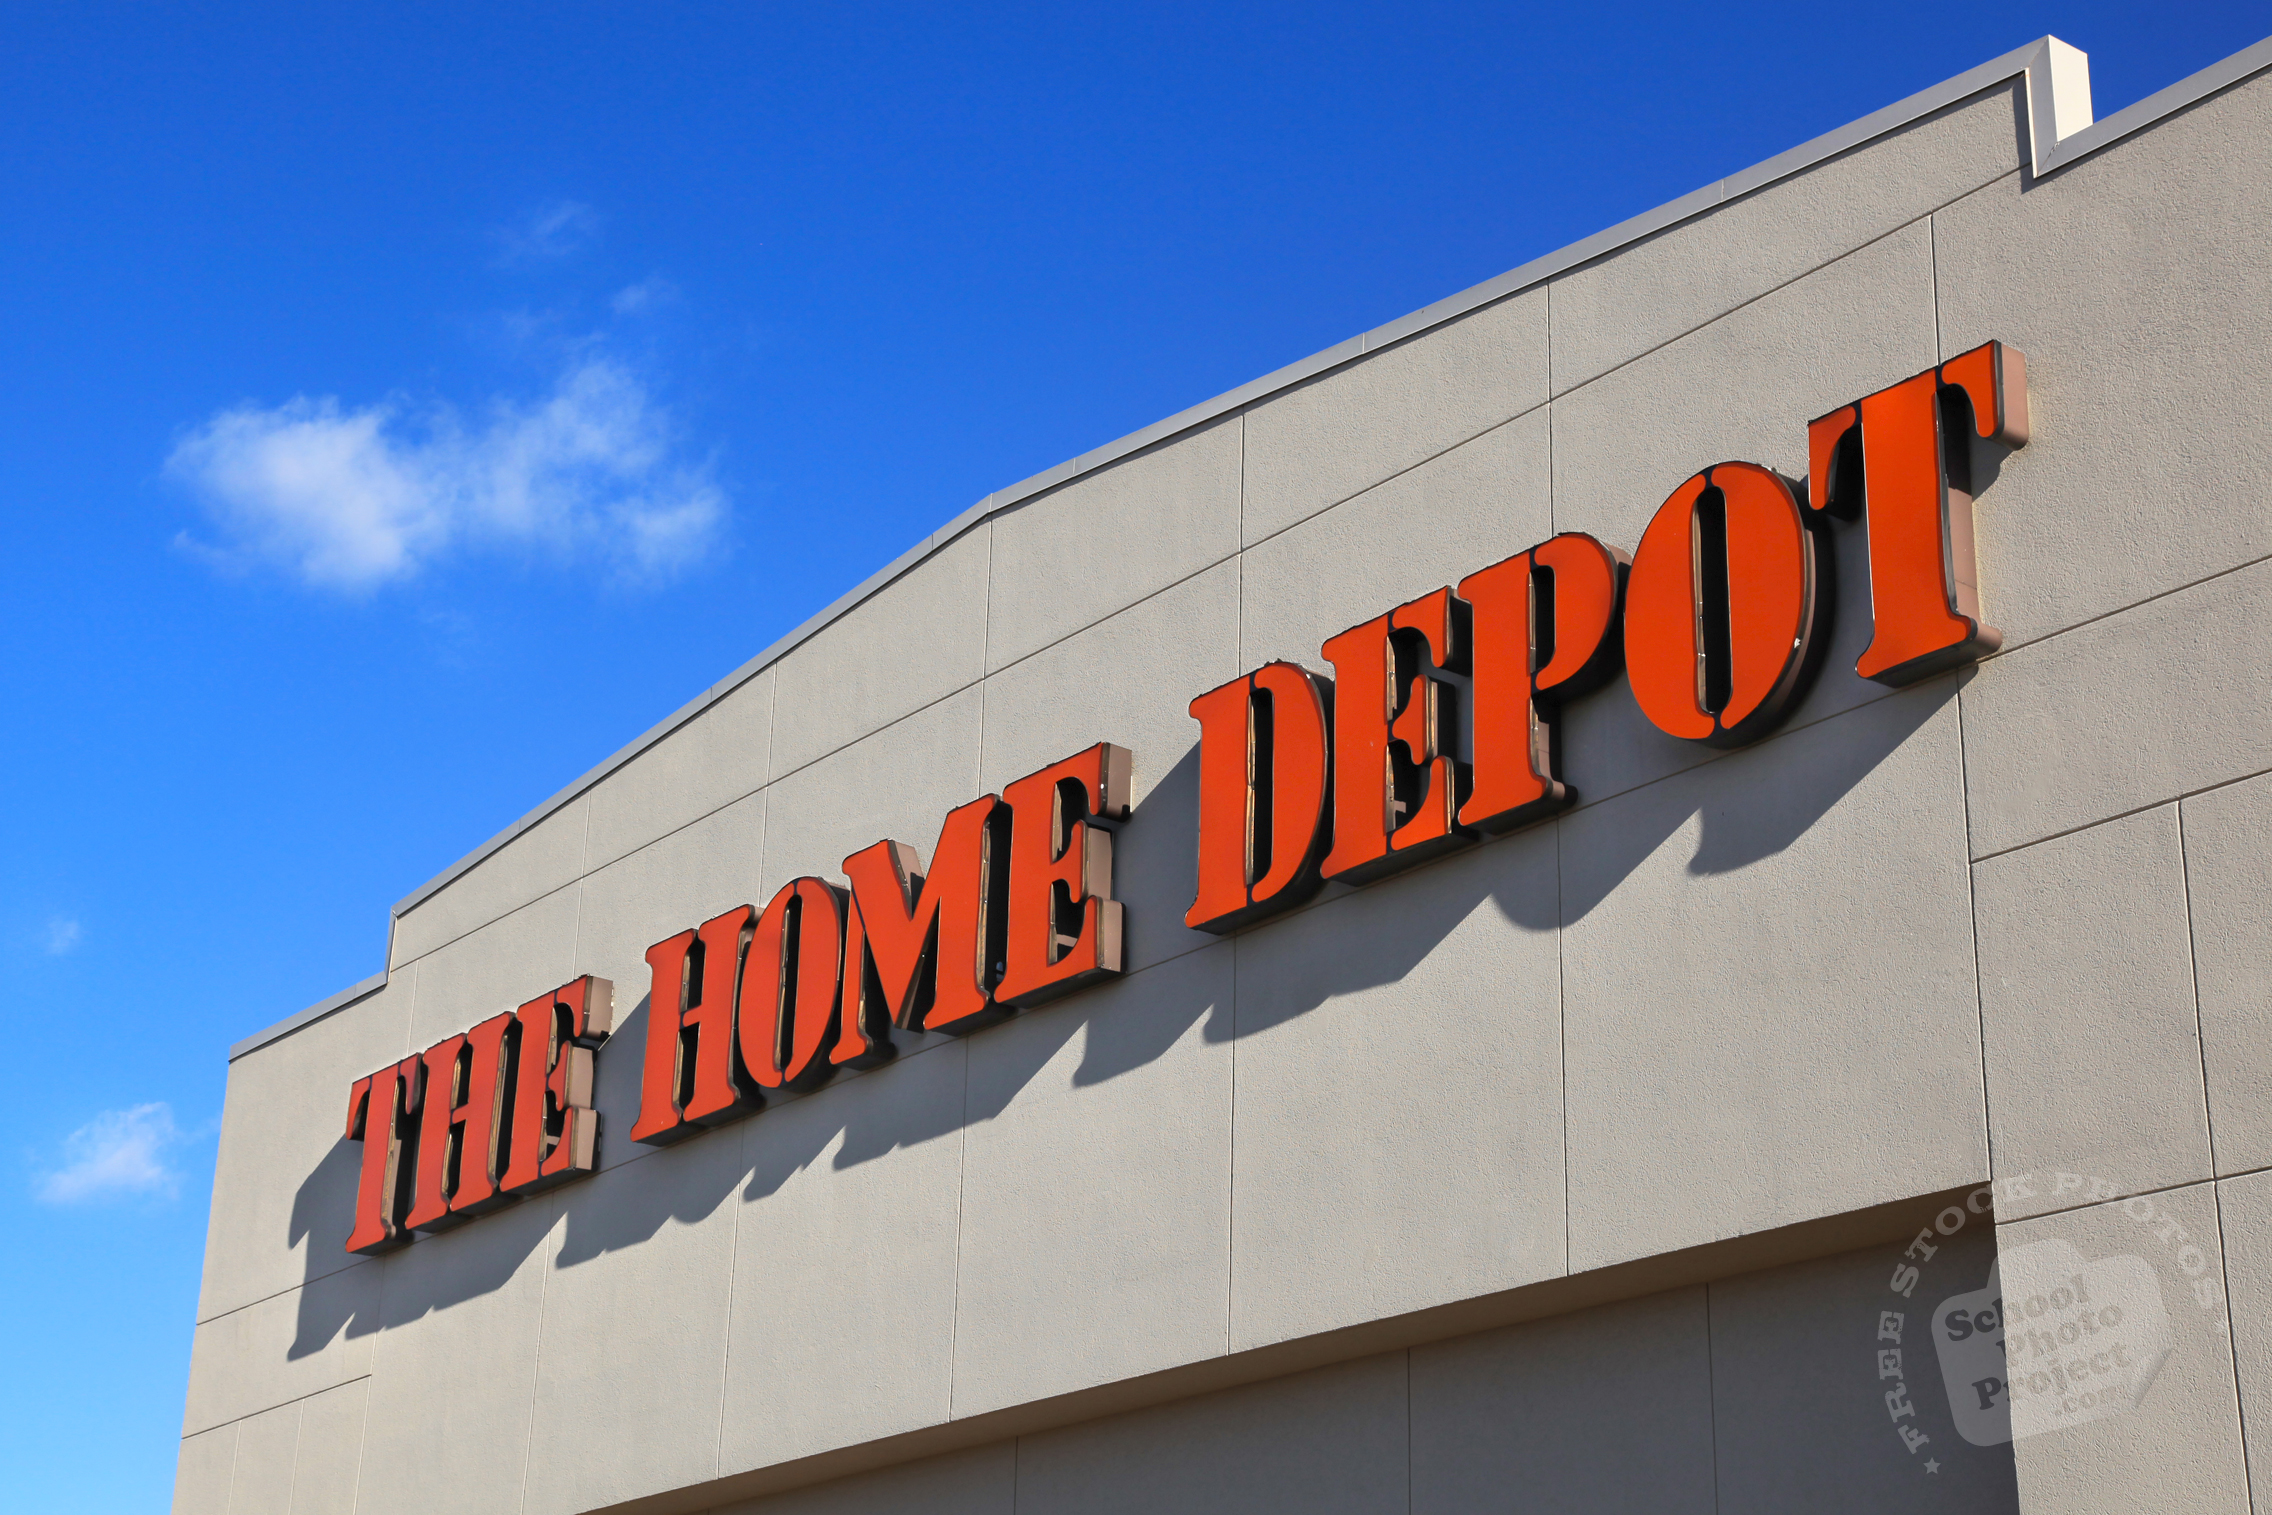 FREE The Home Depot Logo, Home Depot Identity, Popular Company's Brand ...